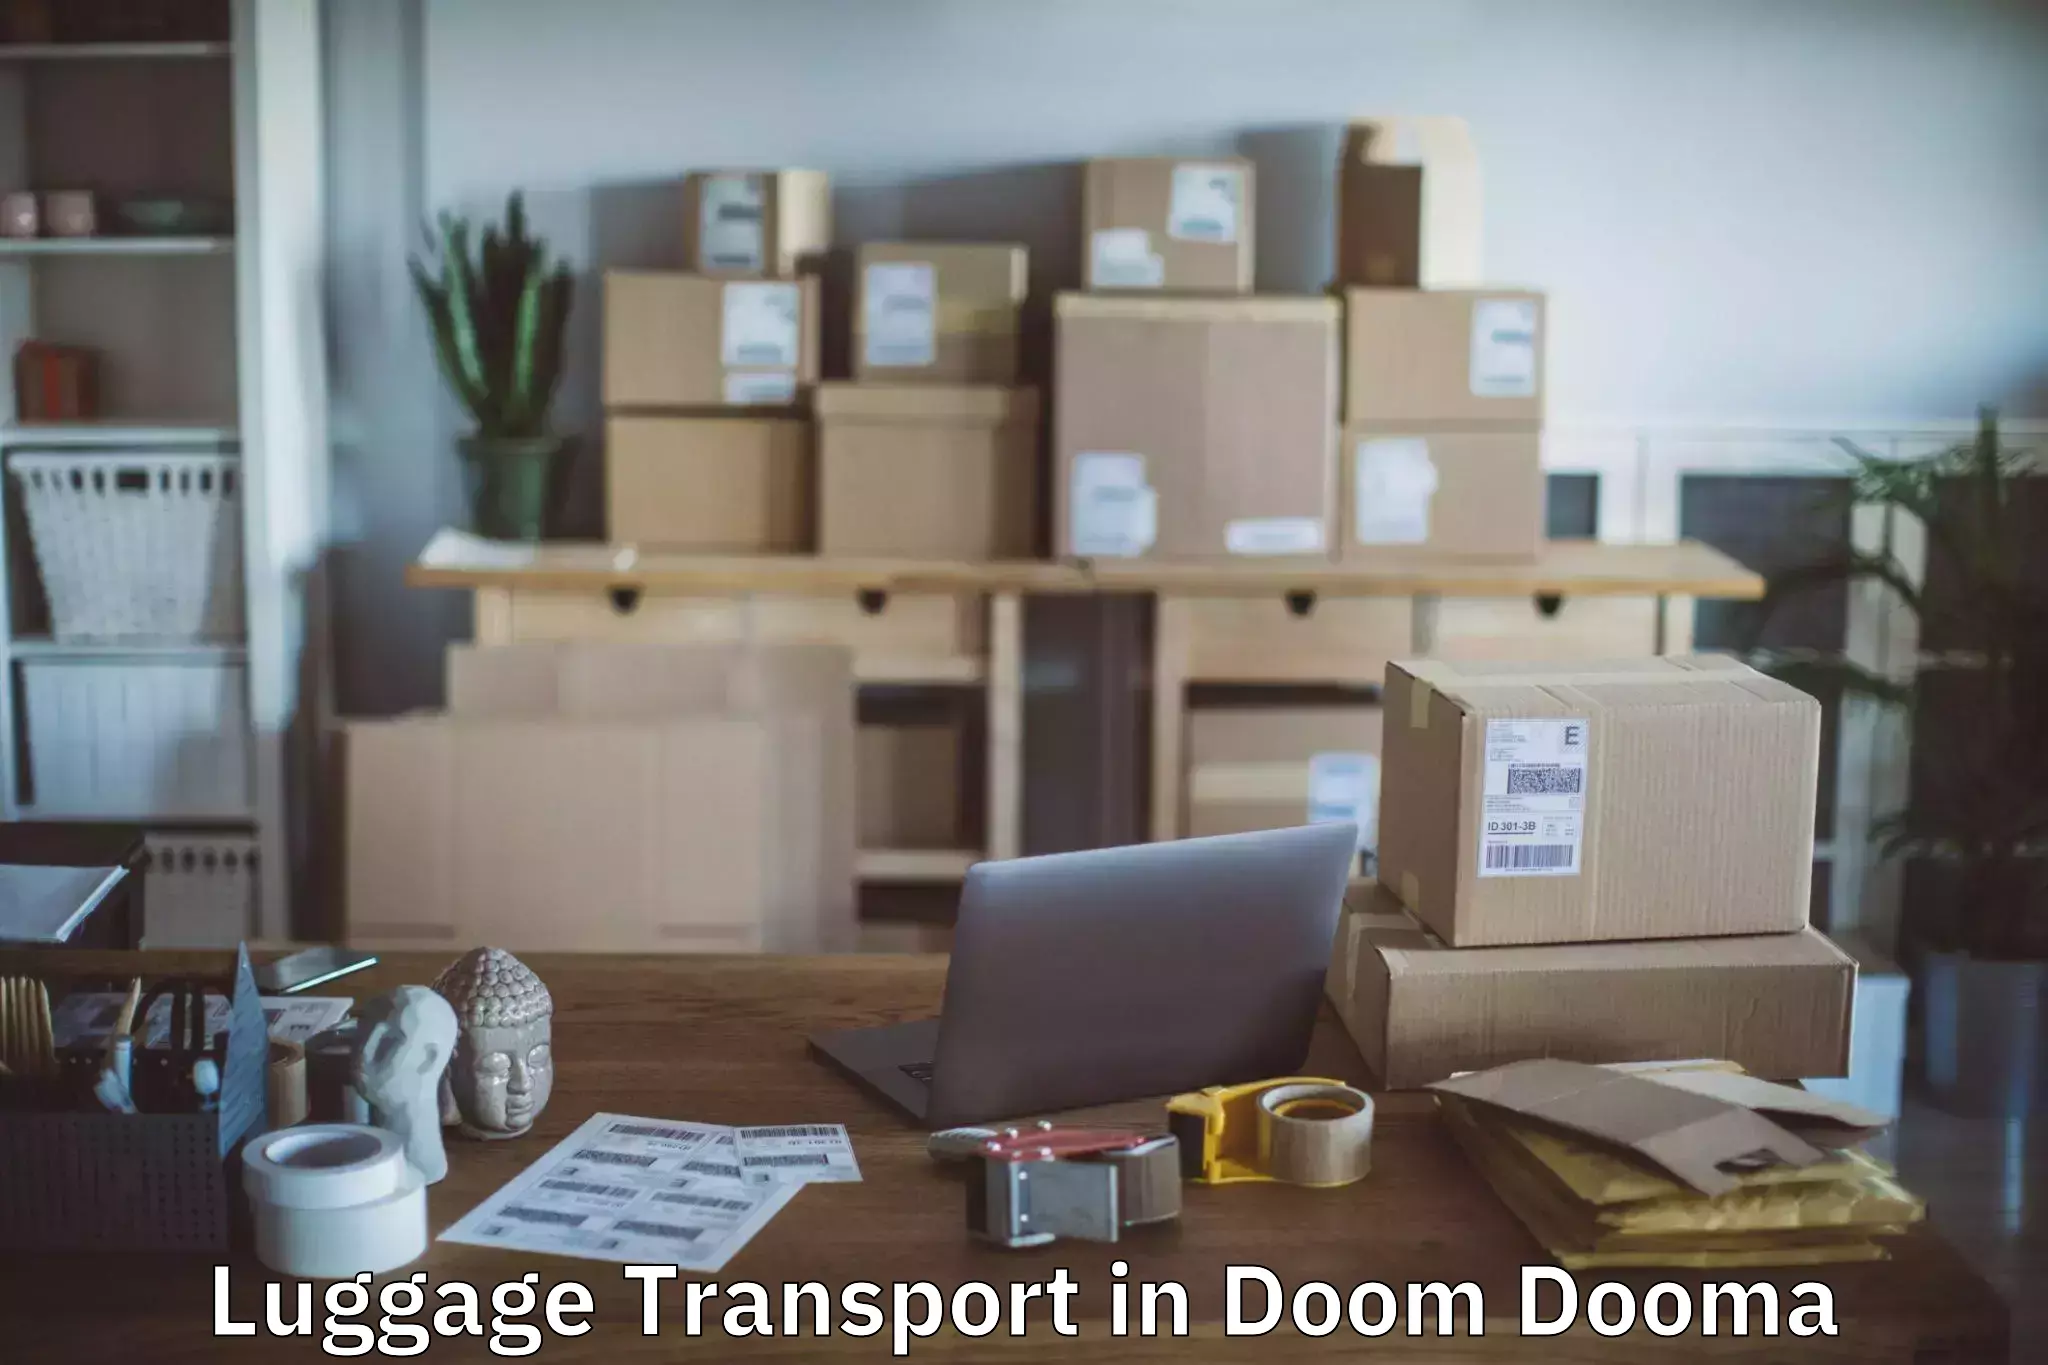 Regional luggage transport in Doom Dooma